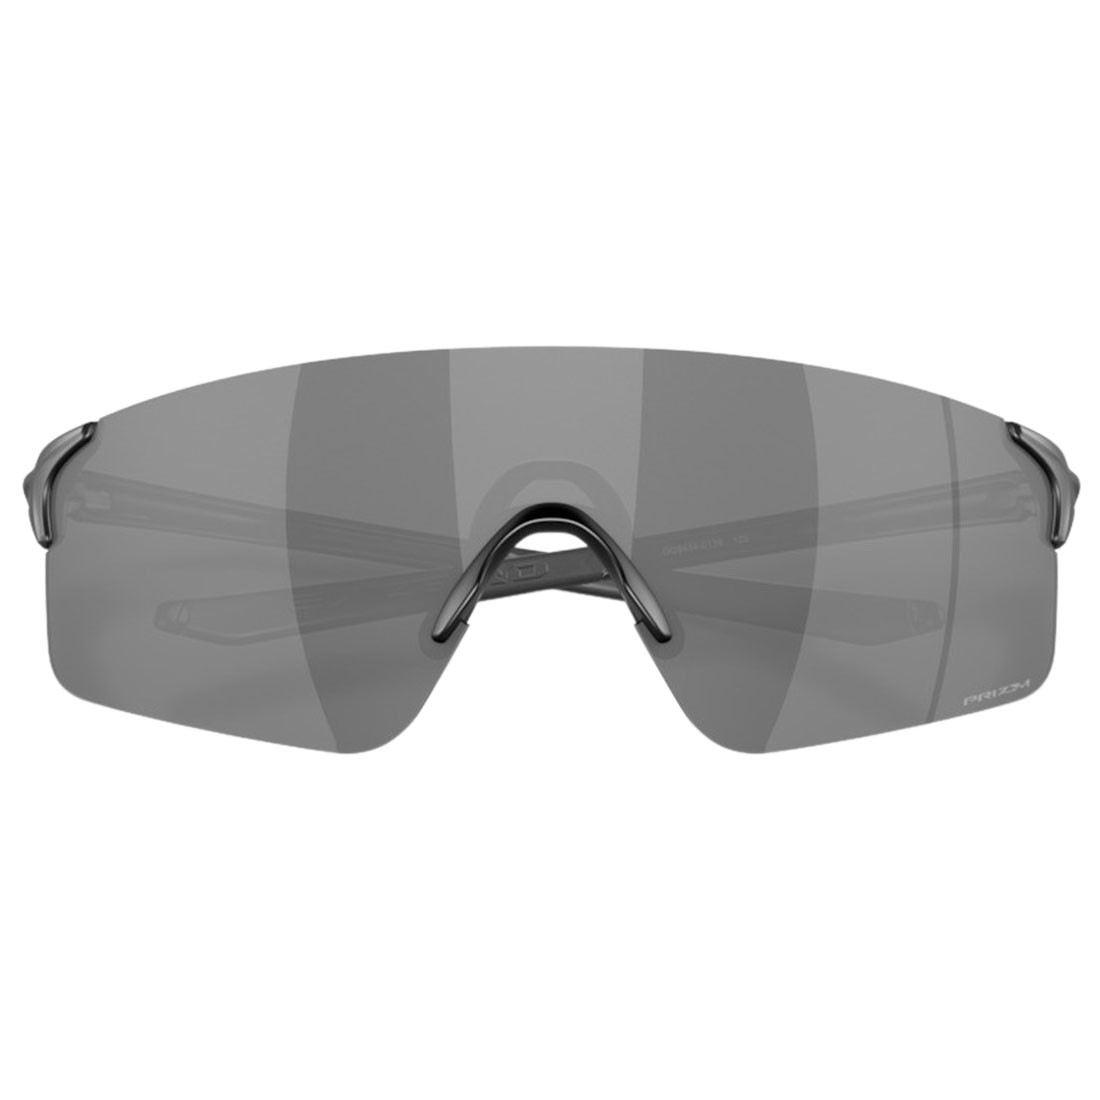 JIMMY CHOO Grey Gradient Round sunglasses cat GOTHA S 509C 50 Final Sale